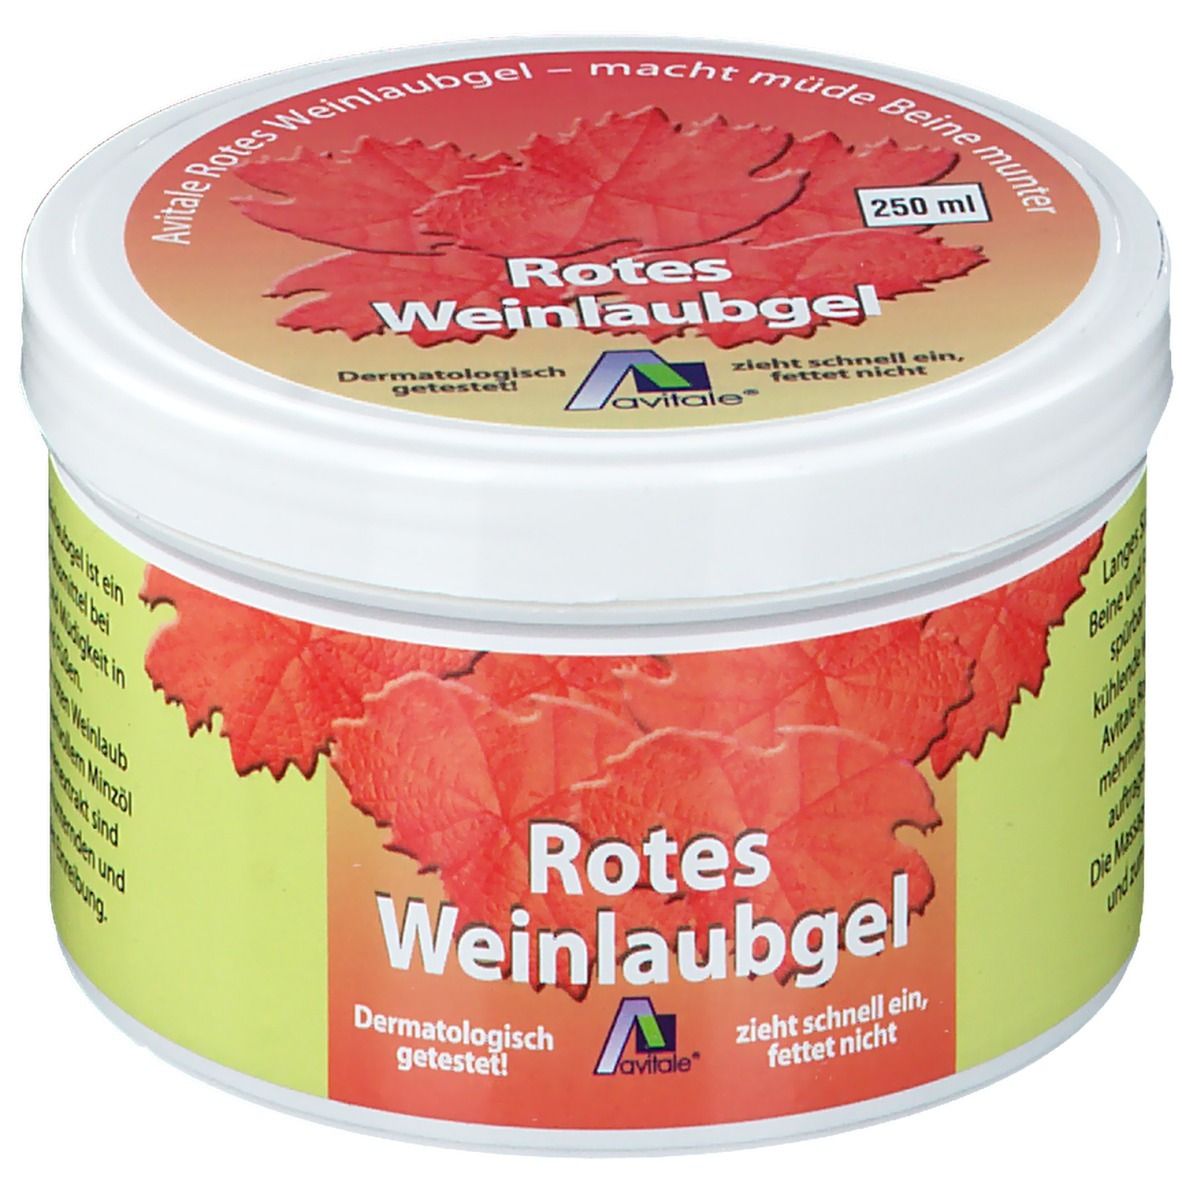 Image of Rotes Weinlaubgel